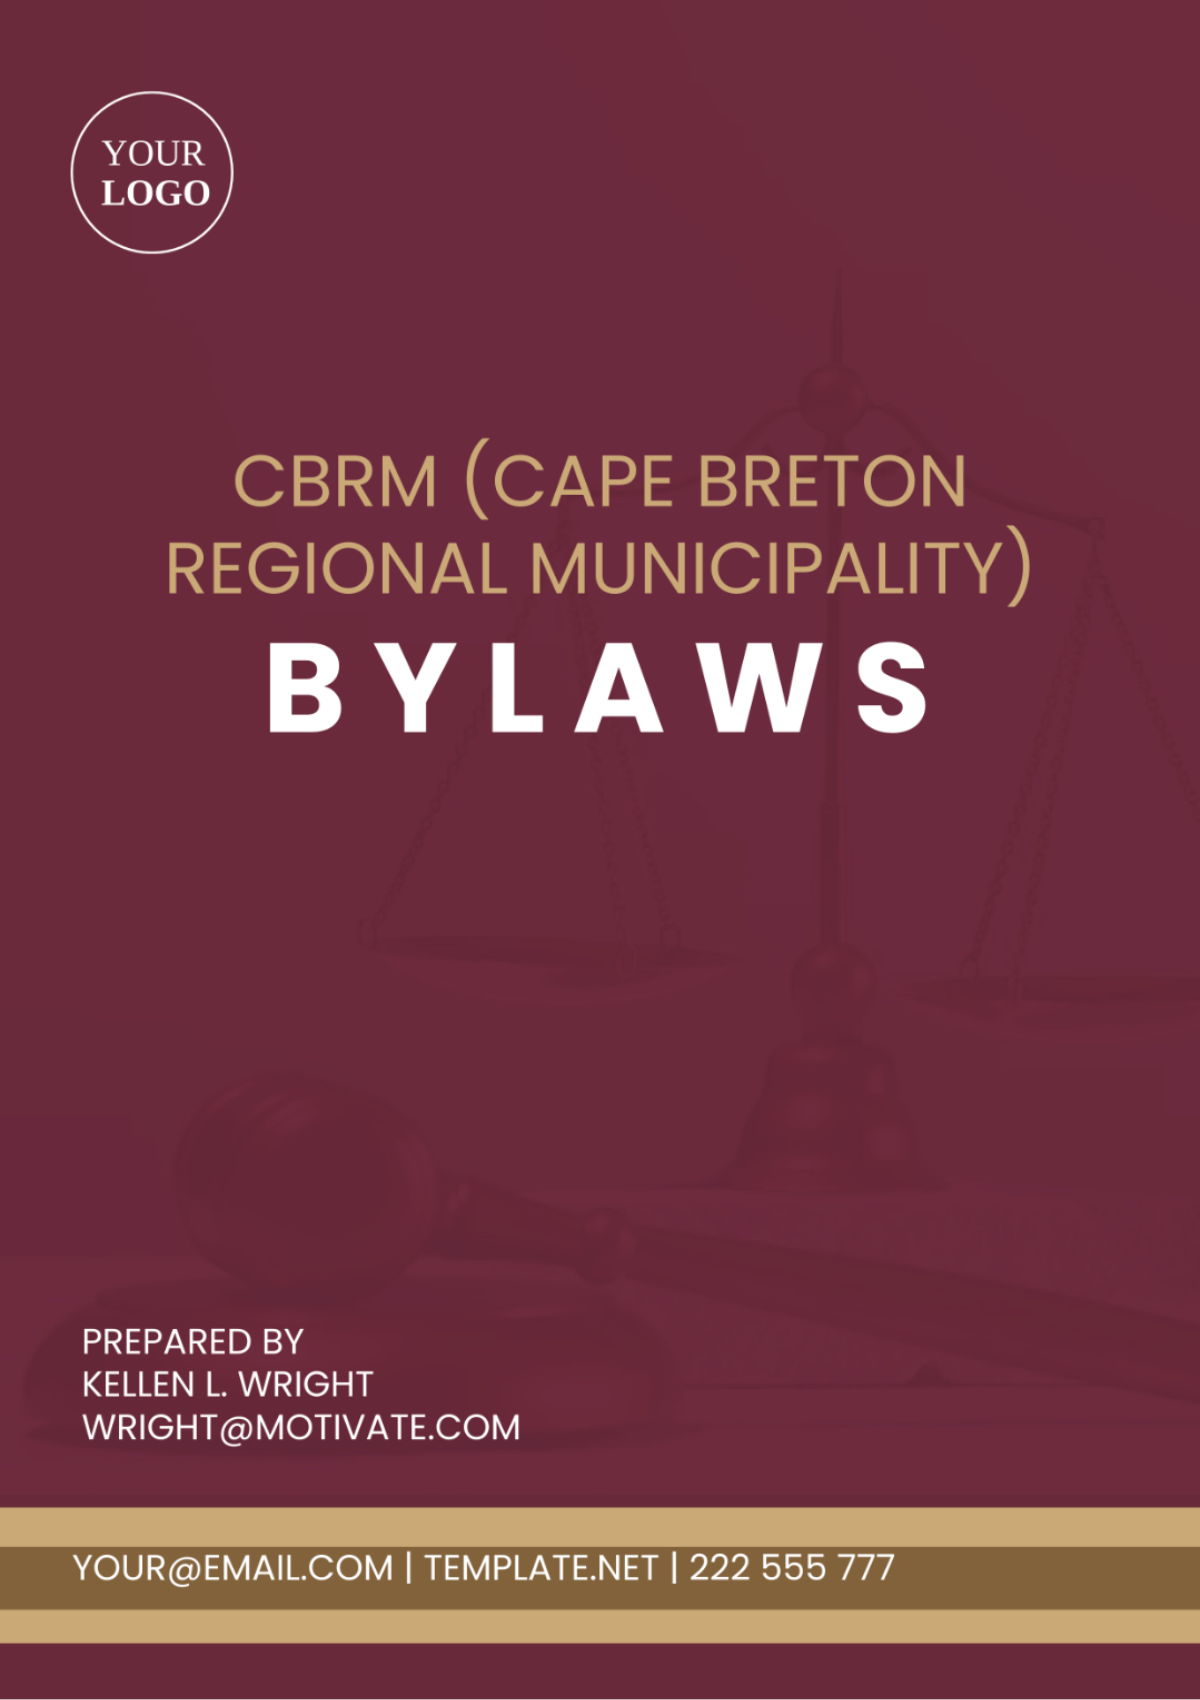 Cbrm(Cape Breton Regional Municipality) Bylaws Template